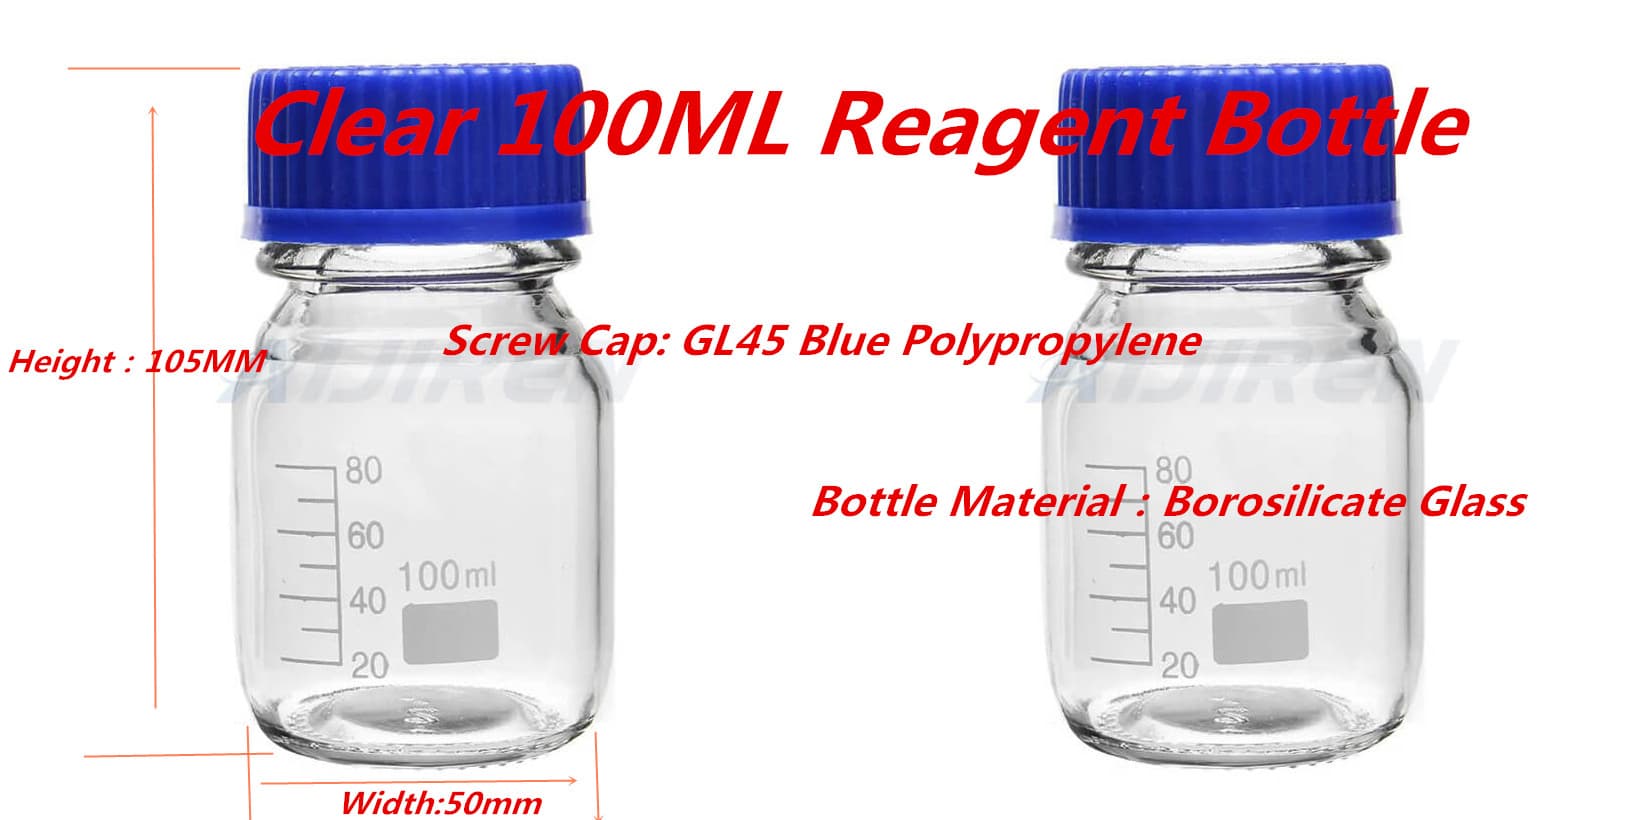 2ml autosampler vialLow volume reagent bottle 100ml with GL45 screw caps